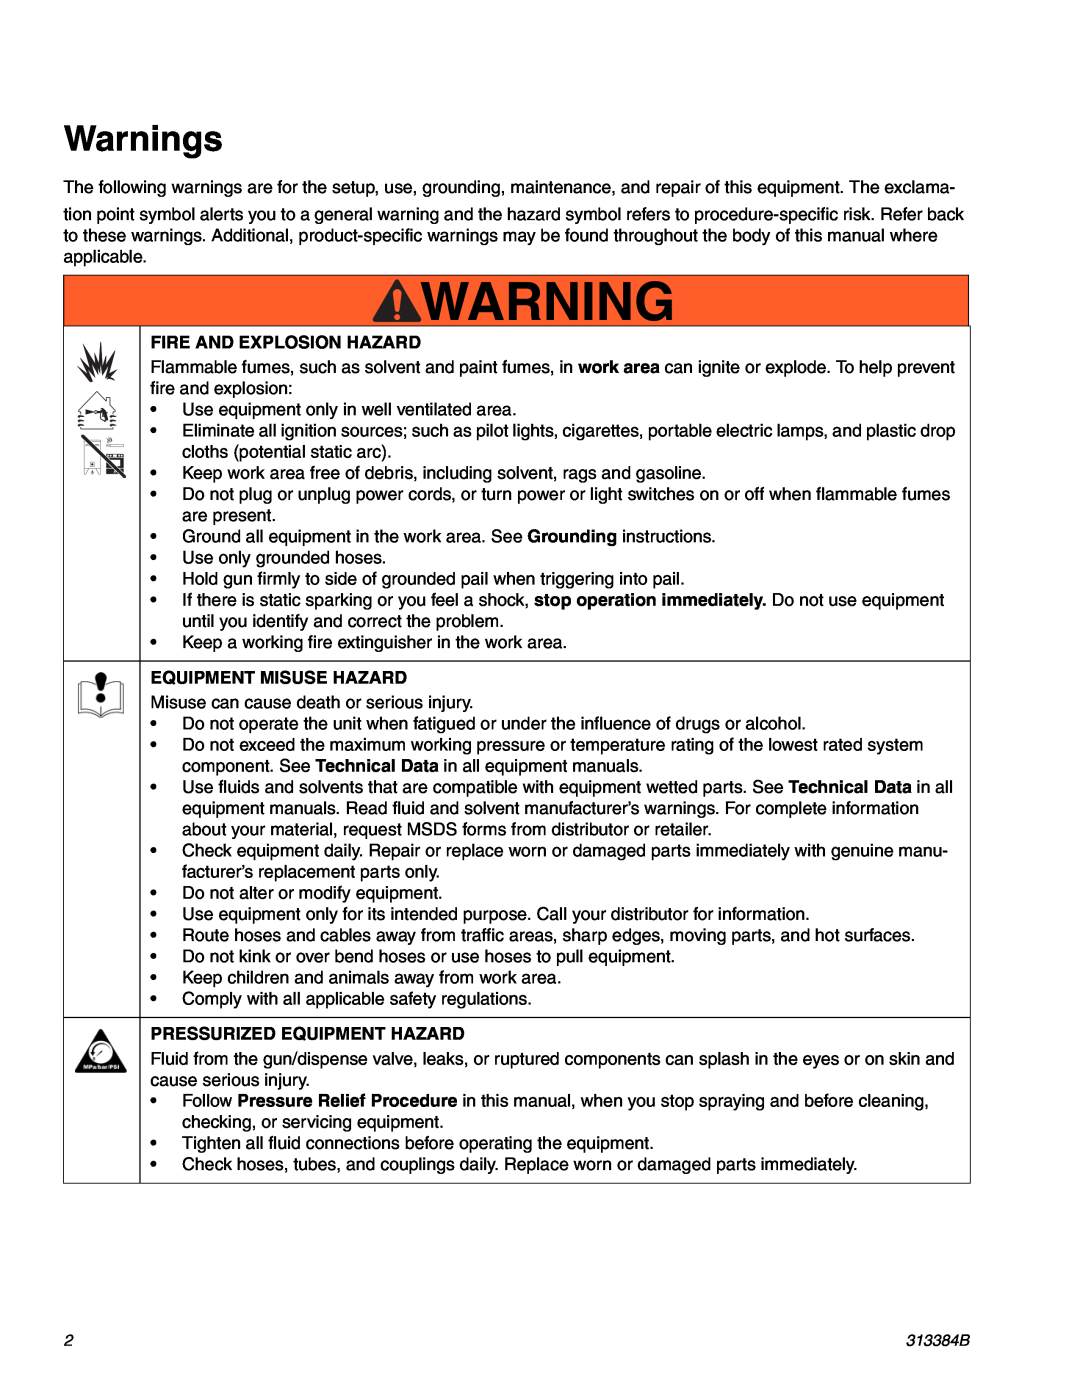 Graco Inc 2000EX, 313384B Warnings, Fire And Explosion Hazard, Equipment Misuse Hazard, Pressurized Equipment Hazard 